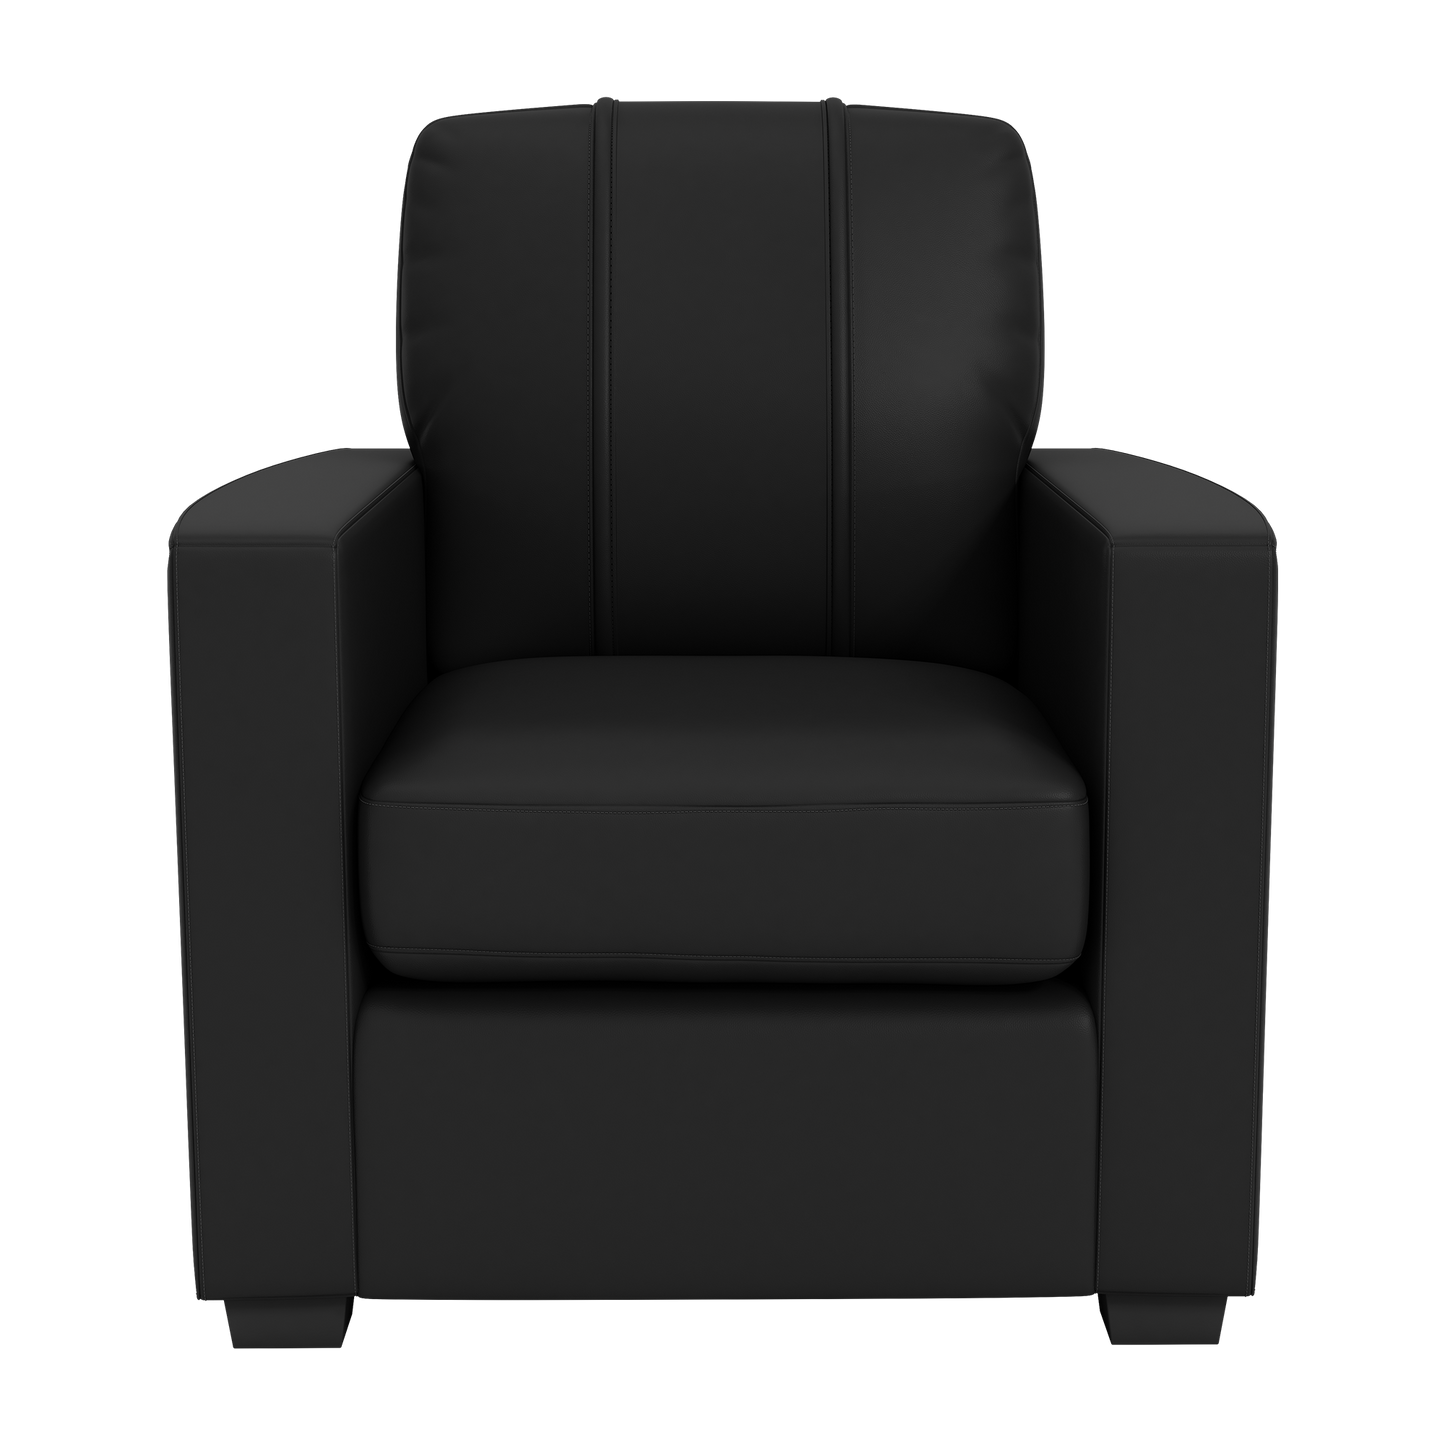 Silver Club Chair with Orlando Magic Gaming Logo